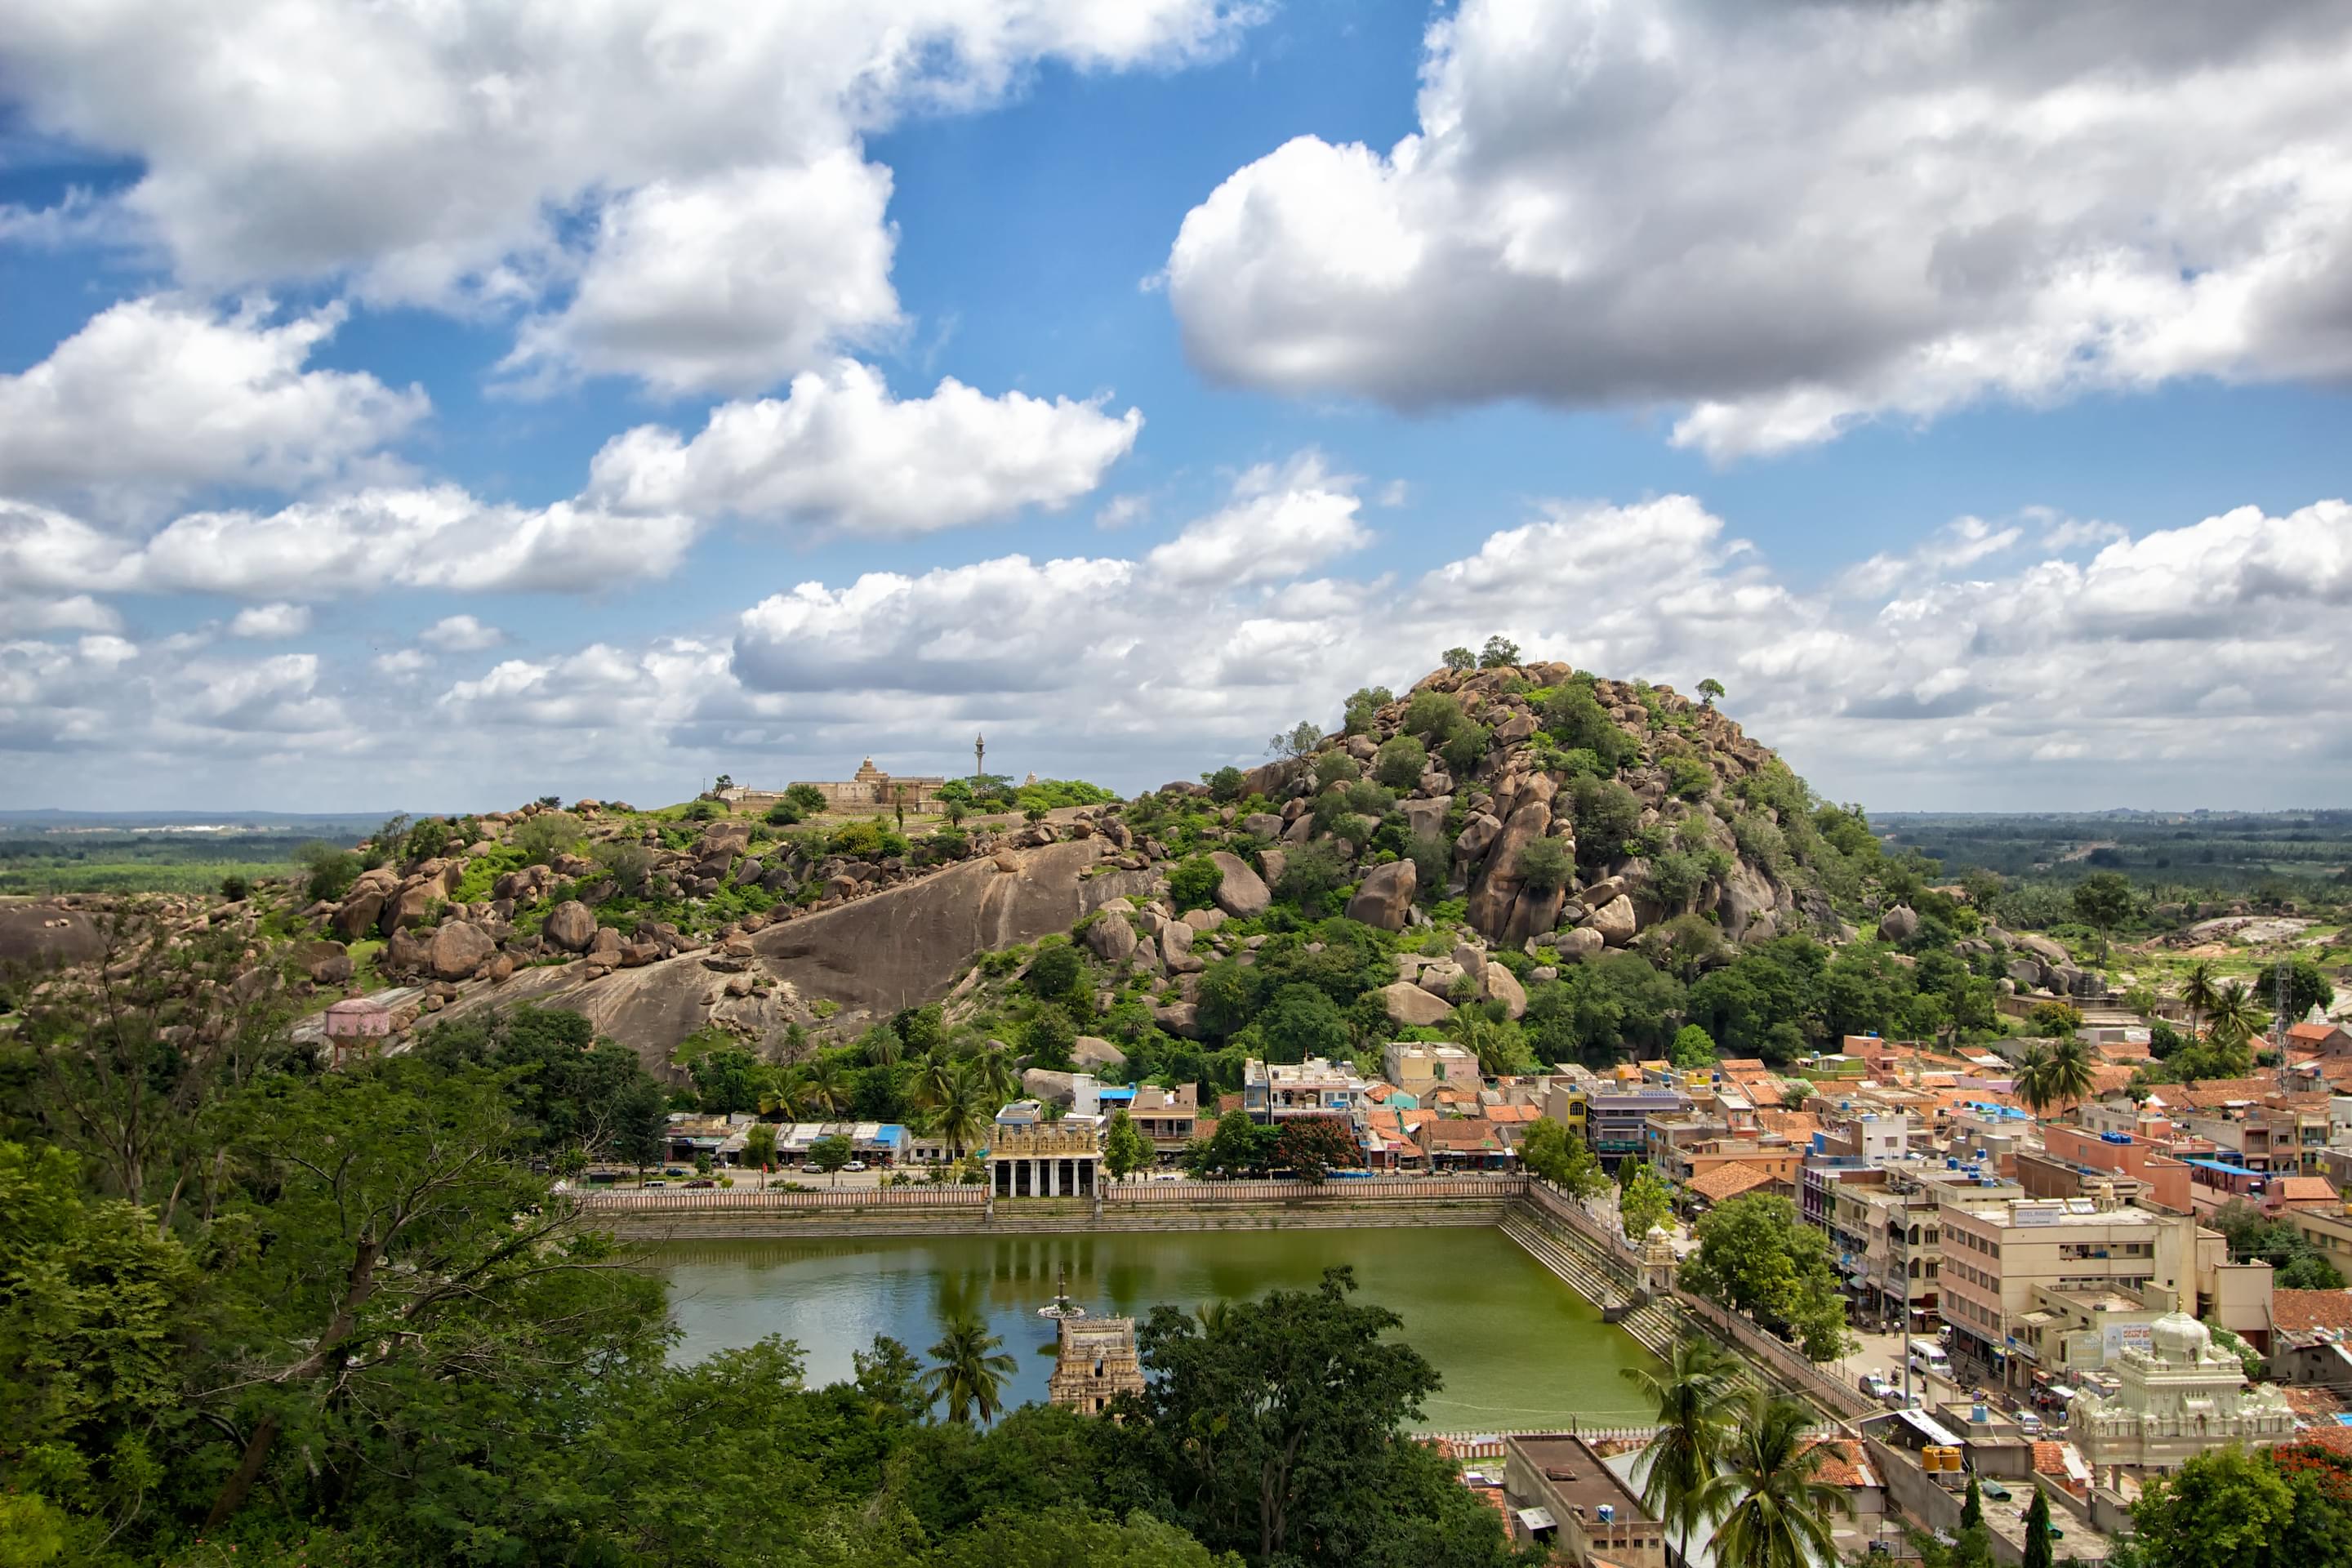 Chandragiri Hill Overview